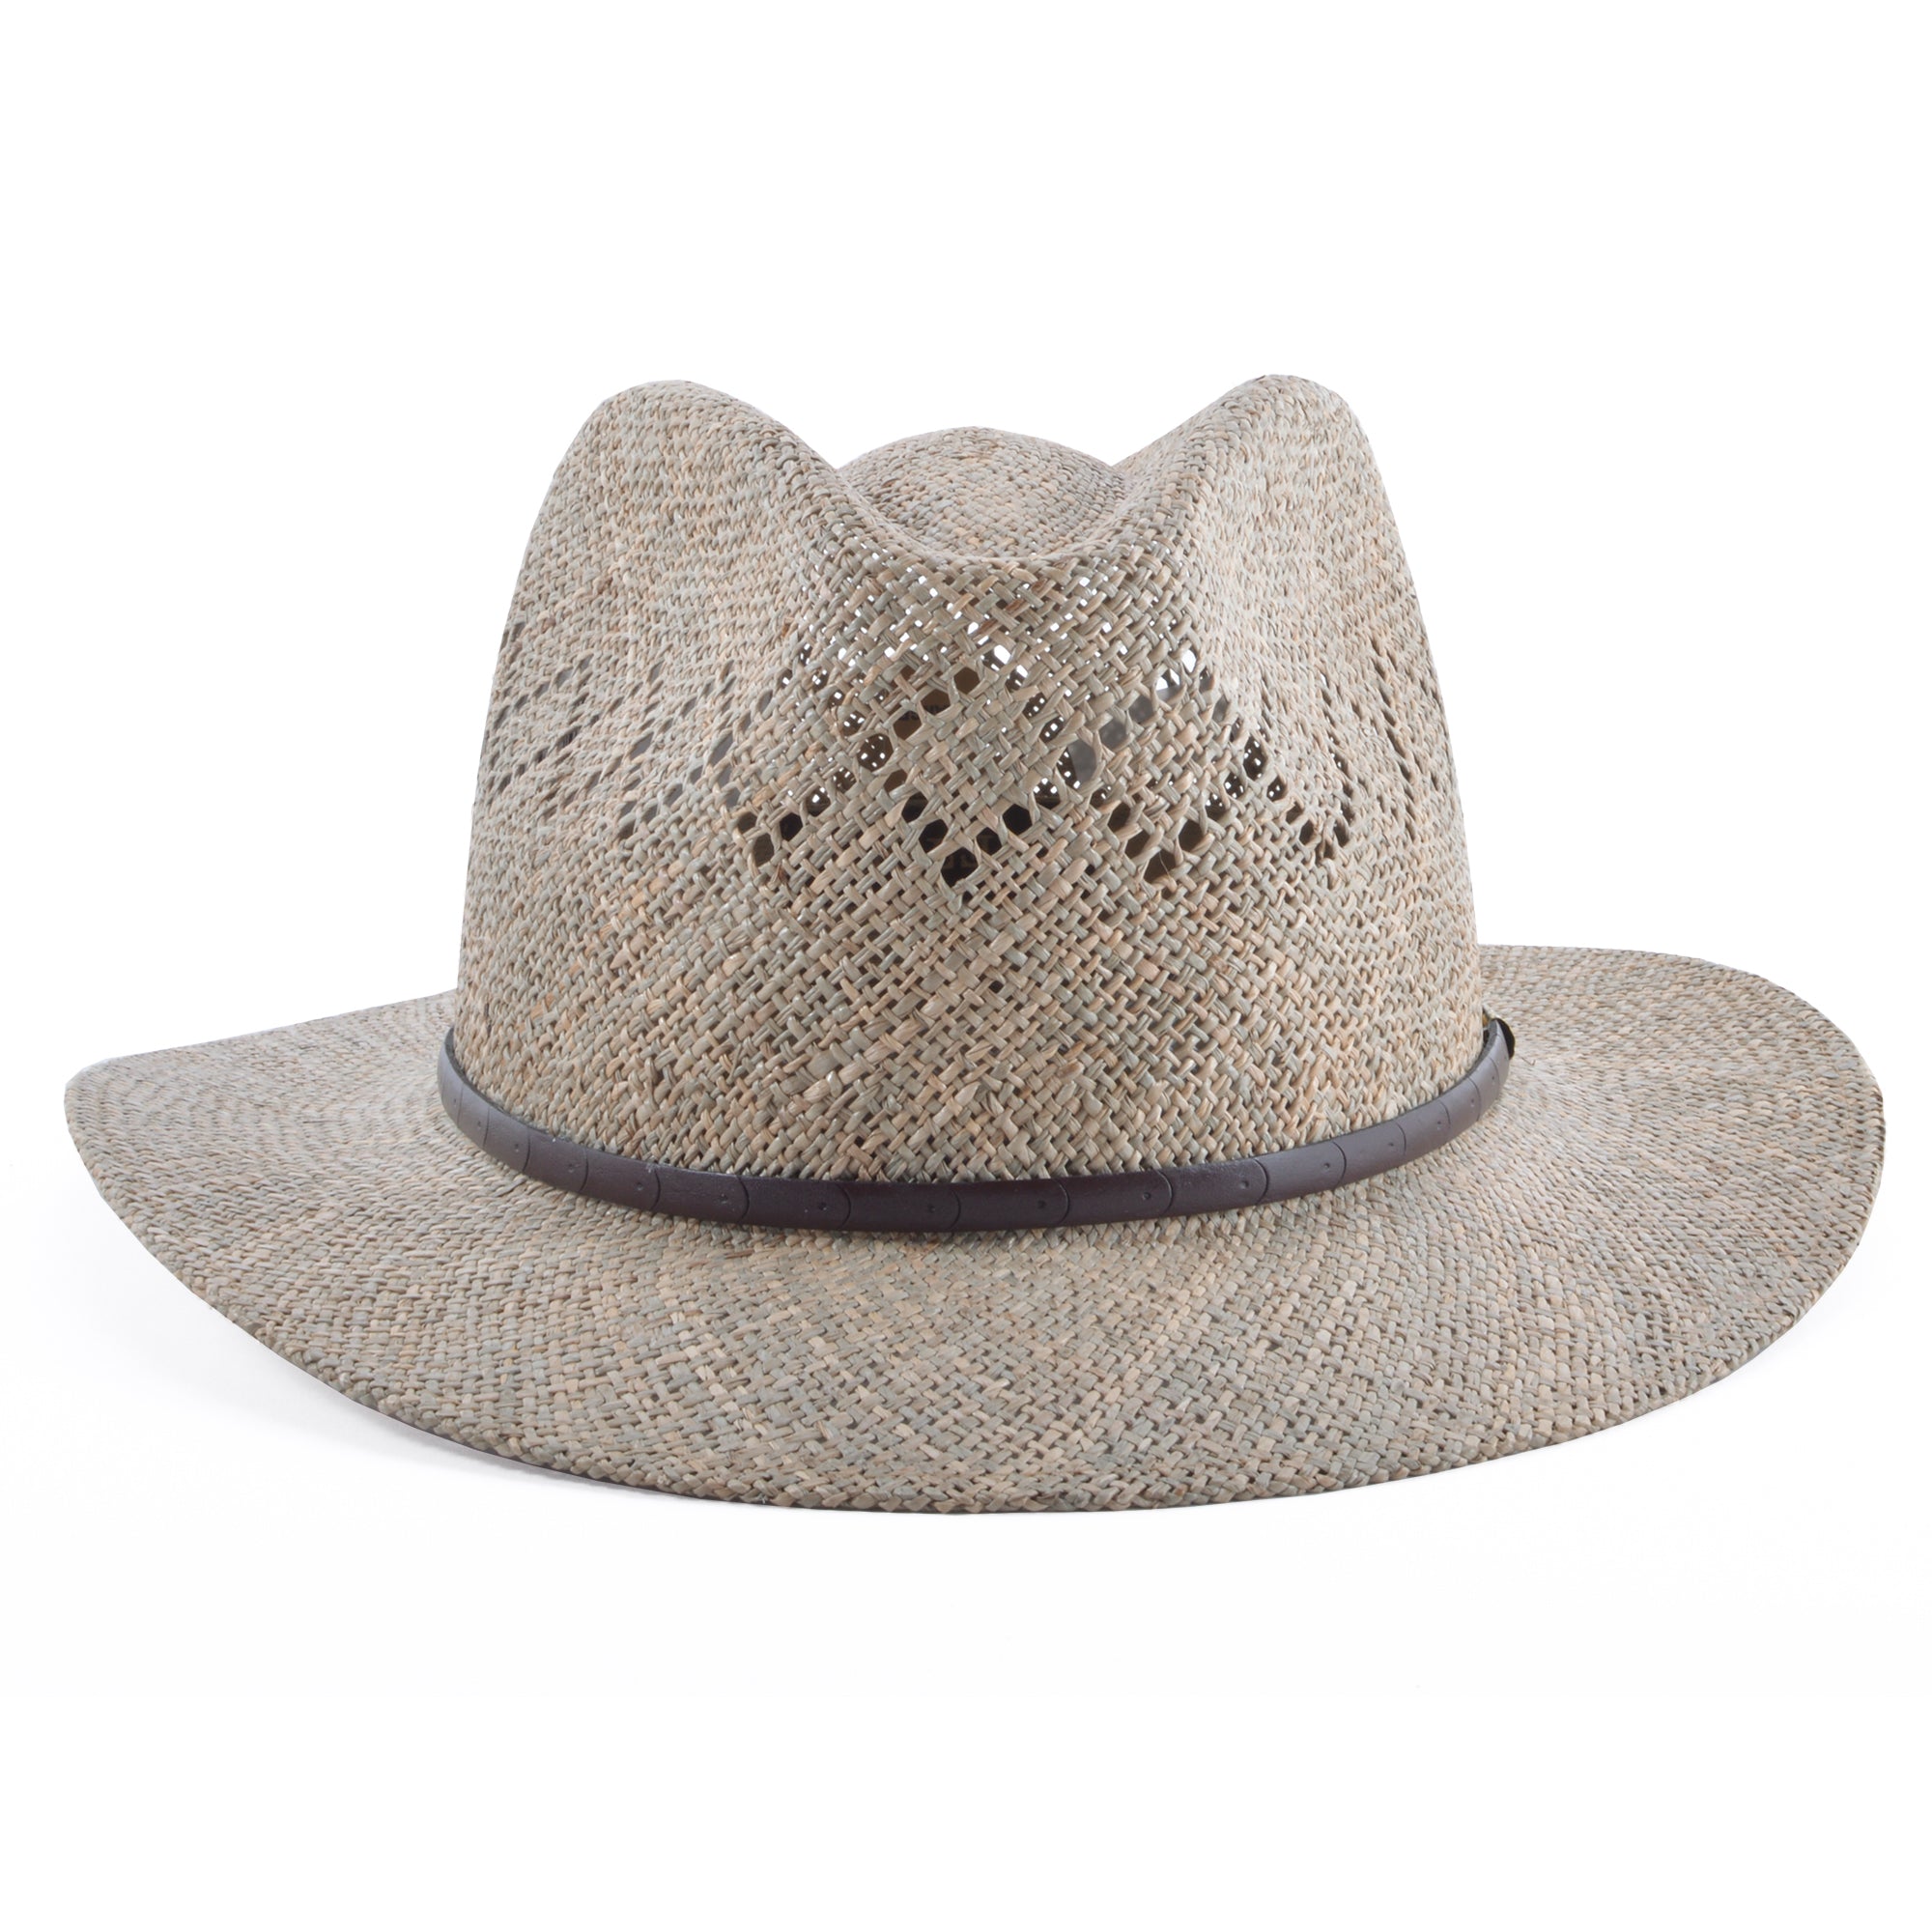 Stetson Creston Vented Seagrass Straw Hat - 0